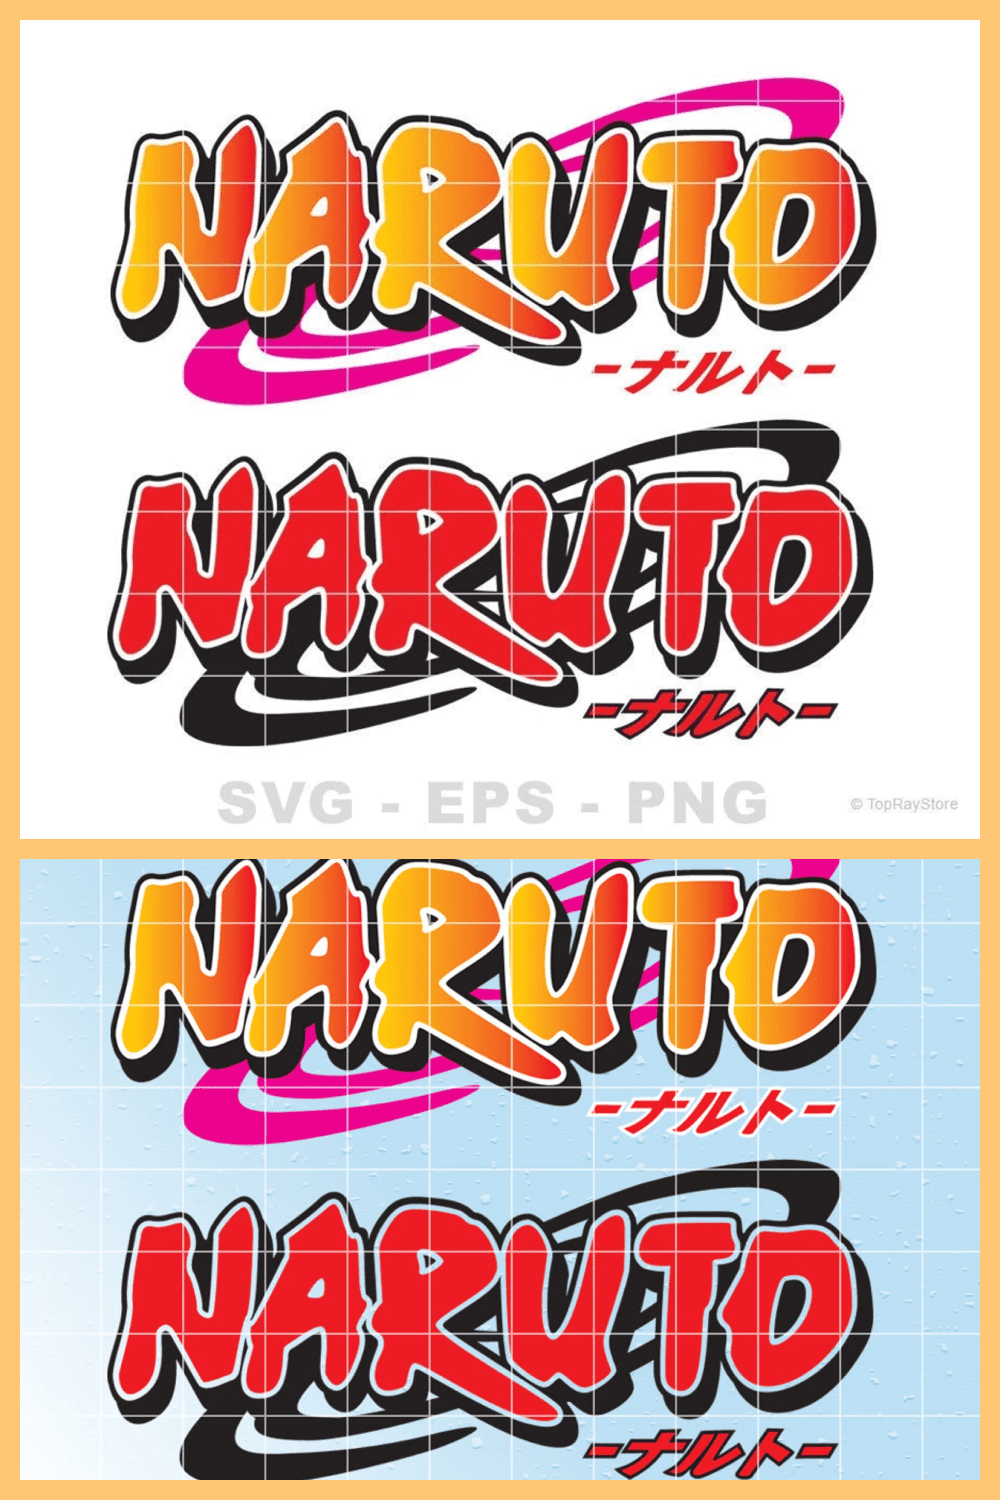 Naruto logo SVG.